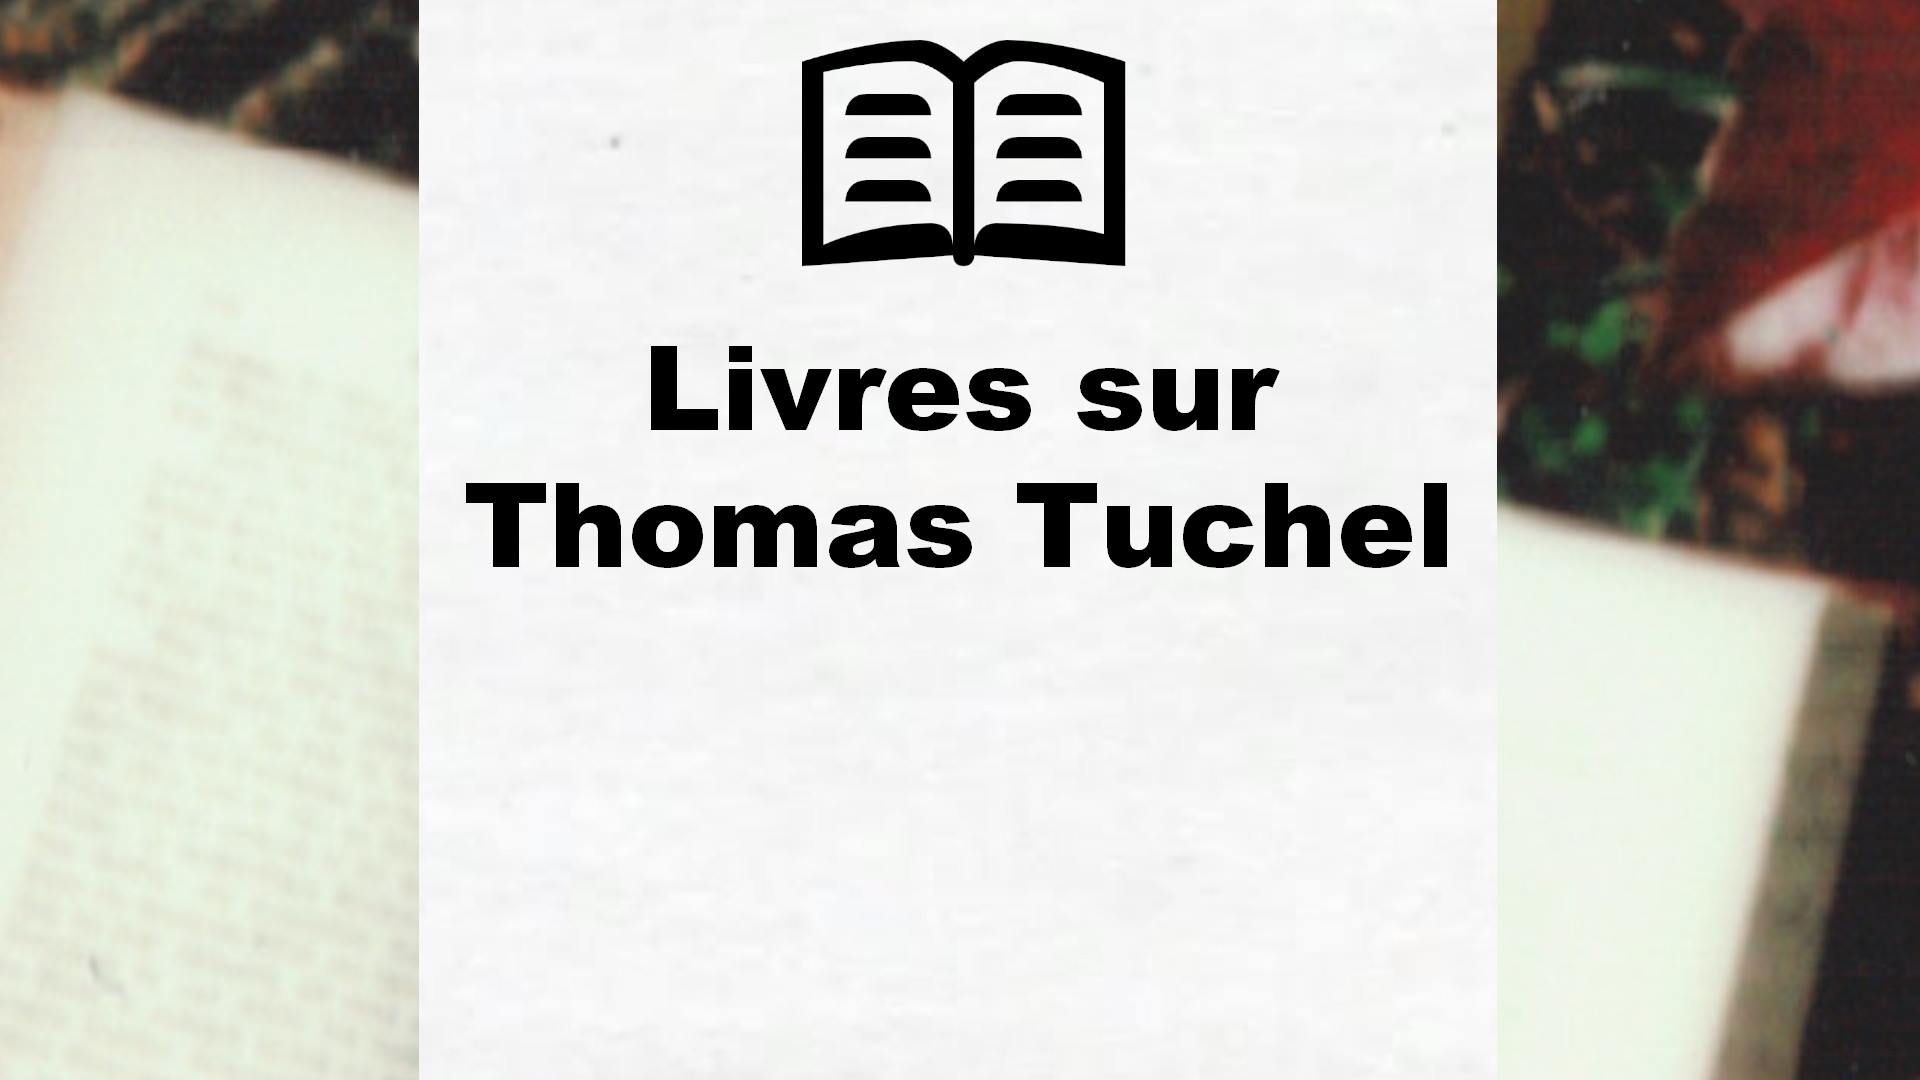 Livres sur Thomas Tuchel